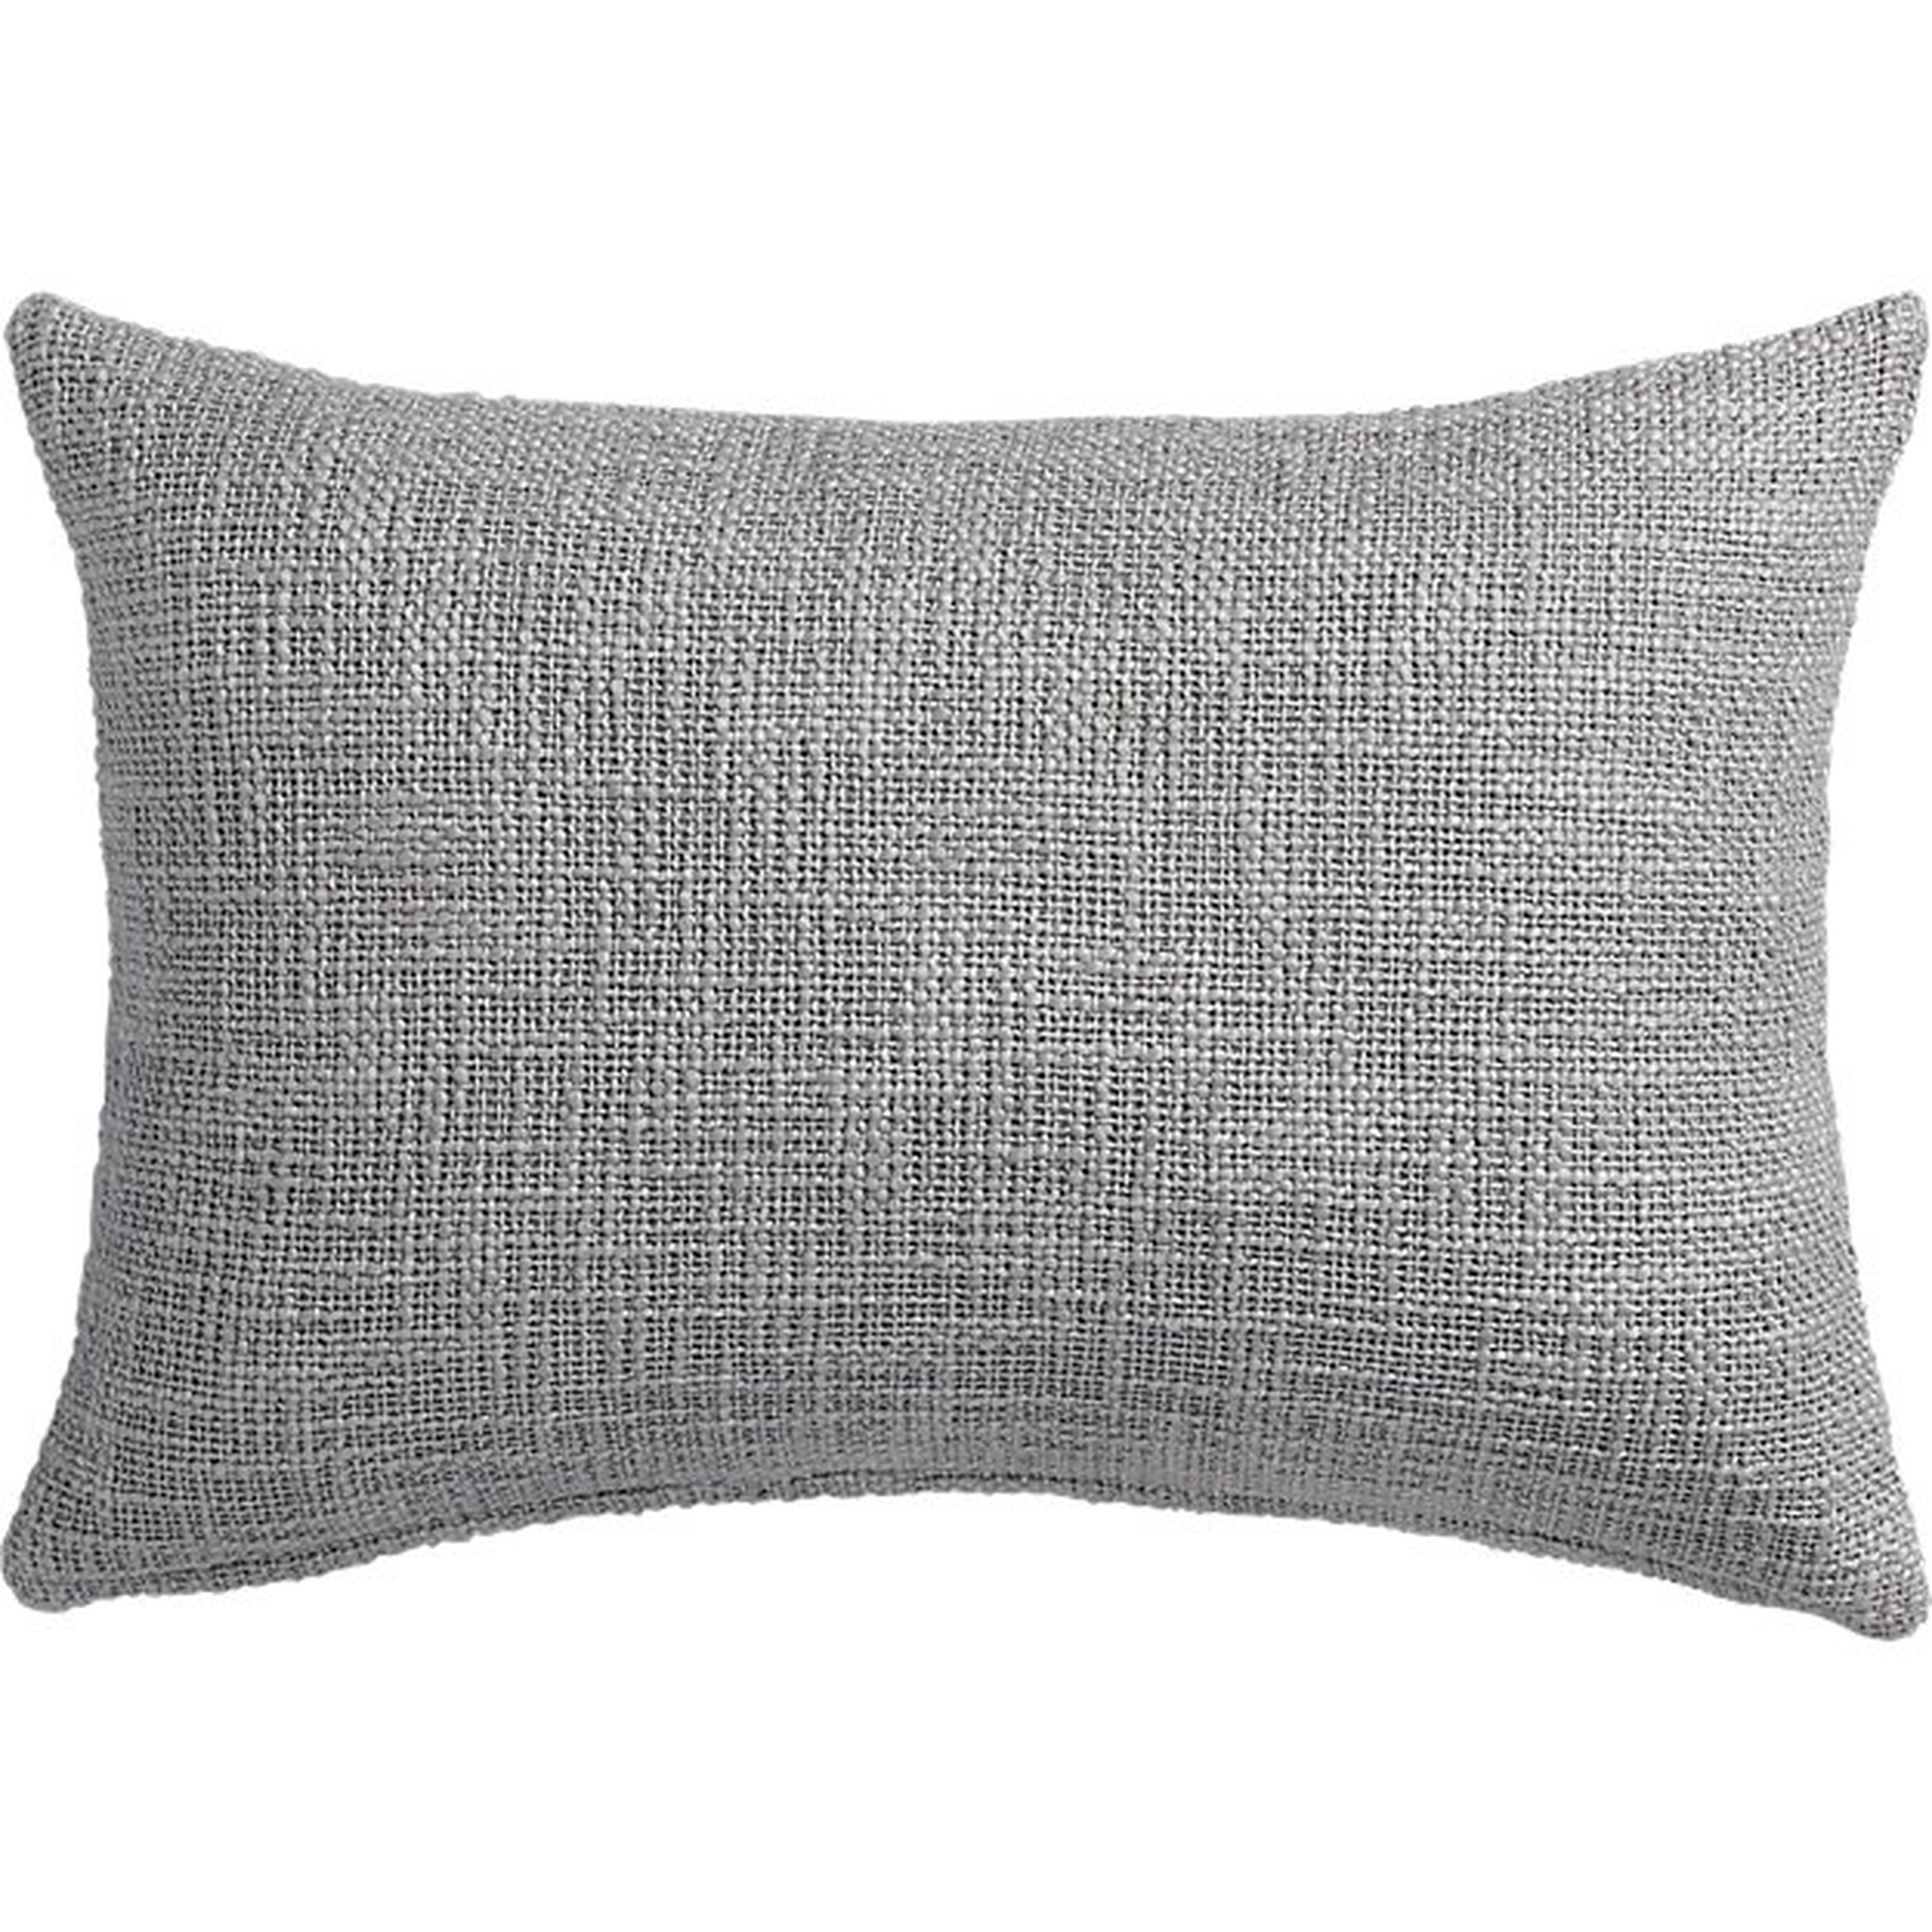 18"x12" glitterati silver pillow with down-alternative insert - CB2